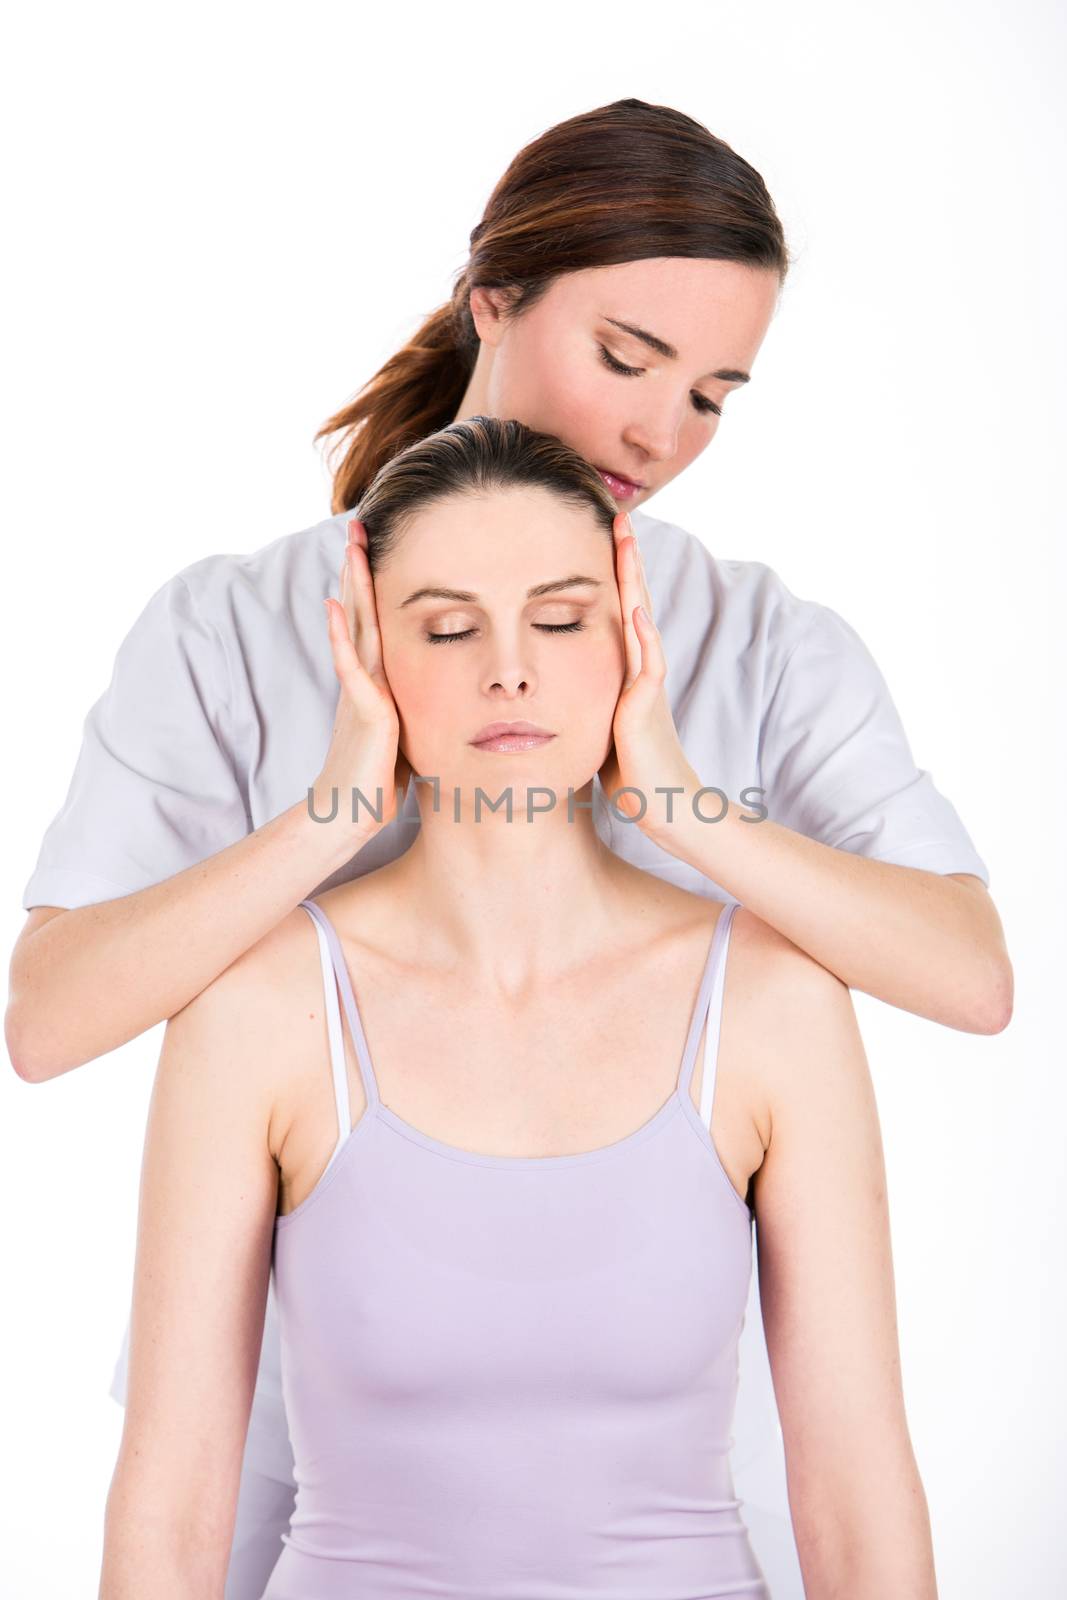 doctor evaluation neck by Flareimage